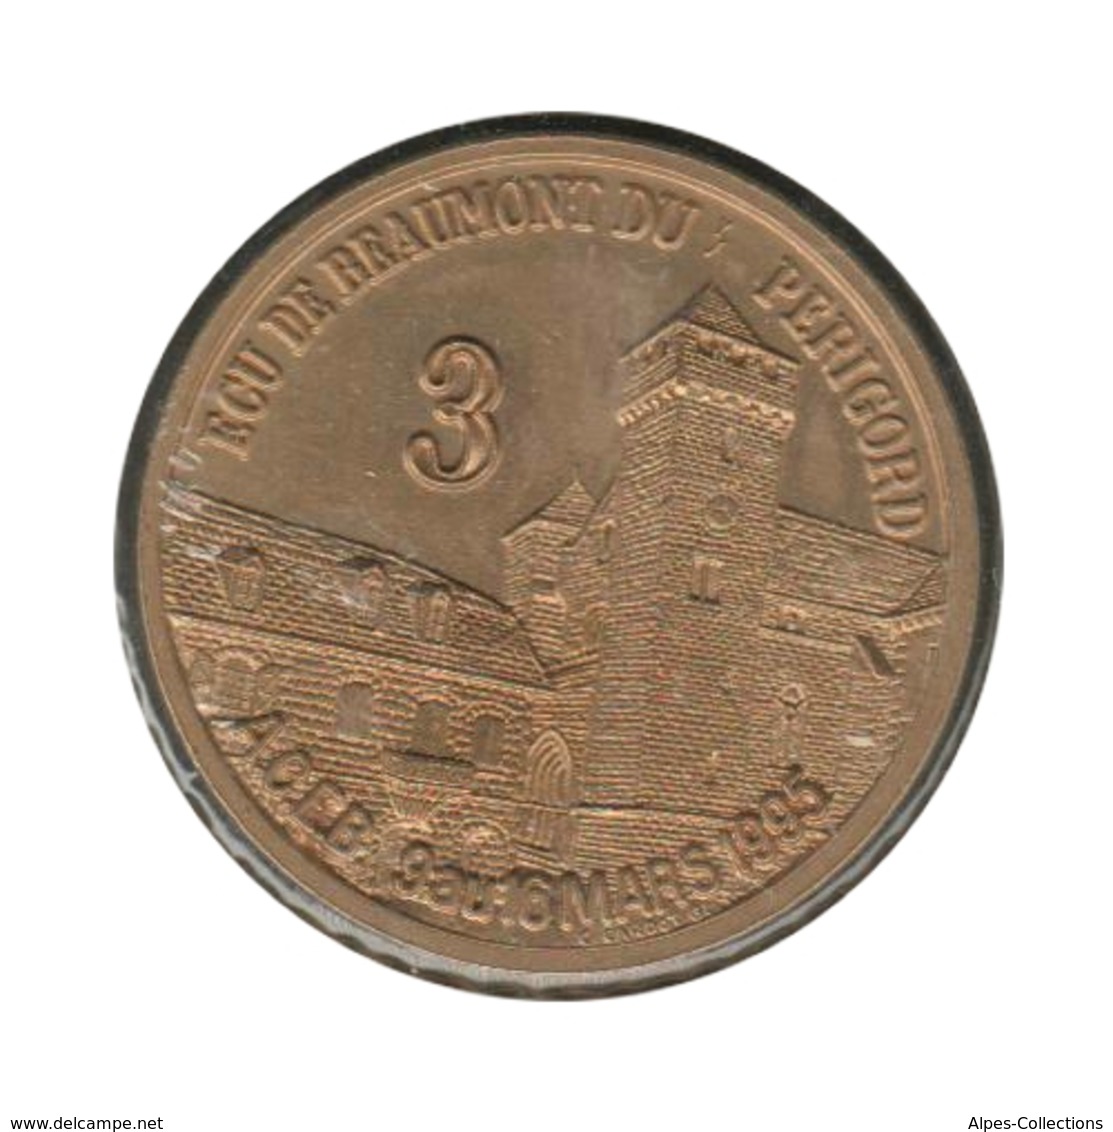 BEAUMONT DU PERIGORD - EC0030.1 - 3 ECU DES VILLES - Réf: NR - 1995 - Euros Of The Cities